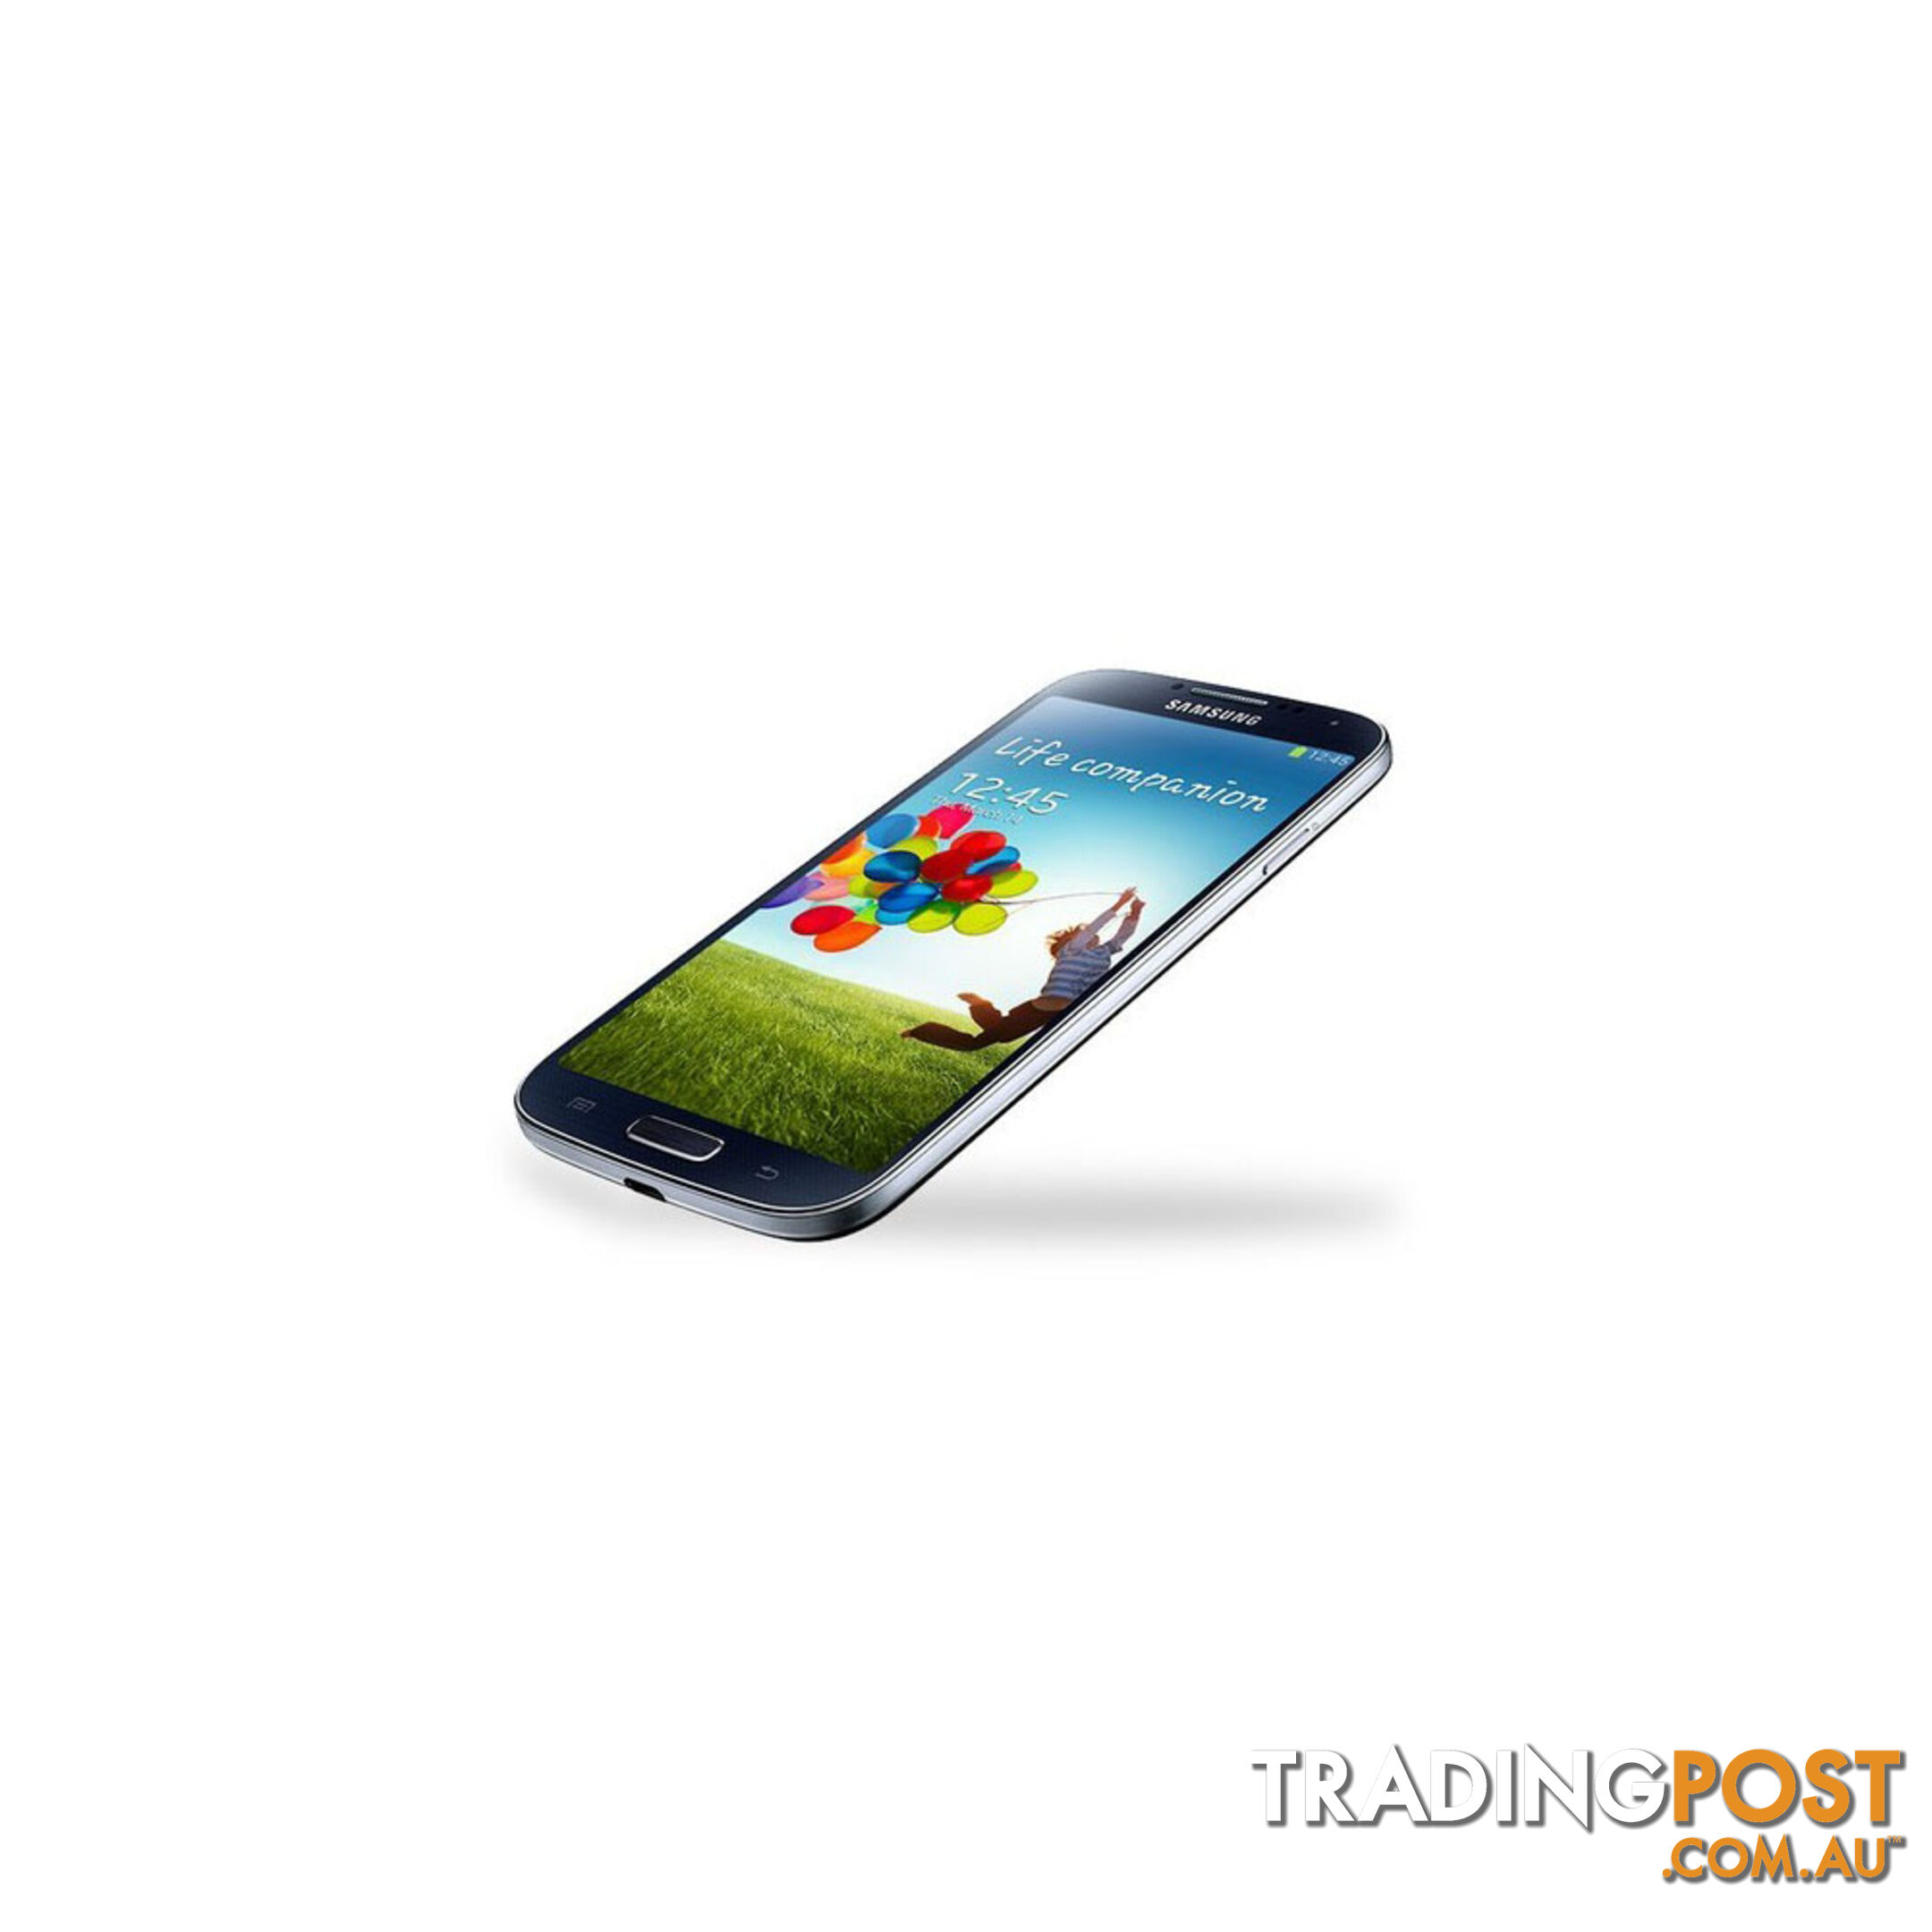 Samsung Galaxy S4 i9505 Black Mobile Phone Refurbished